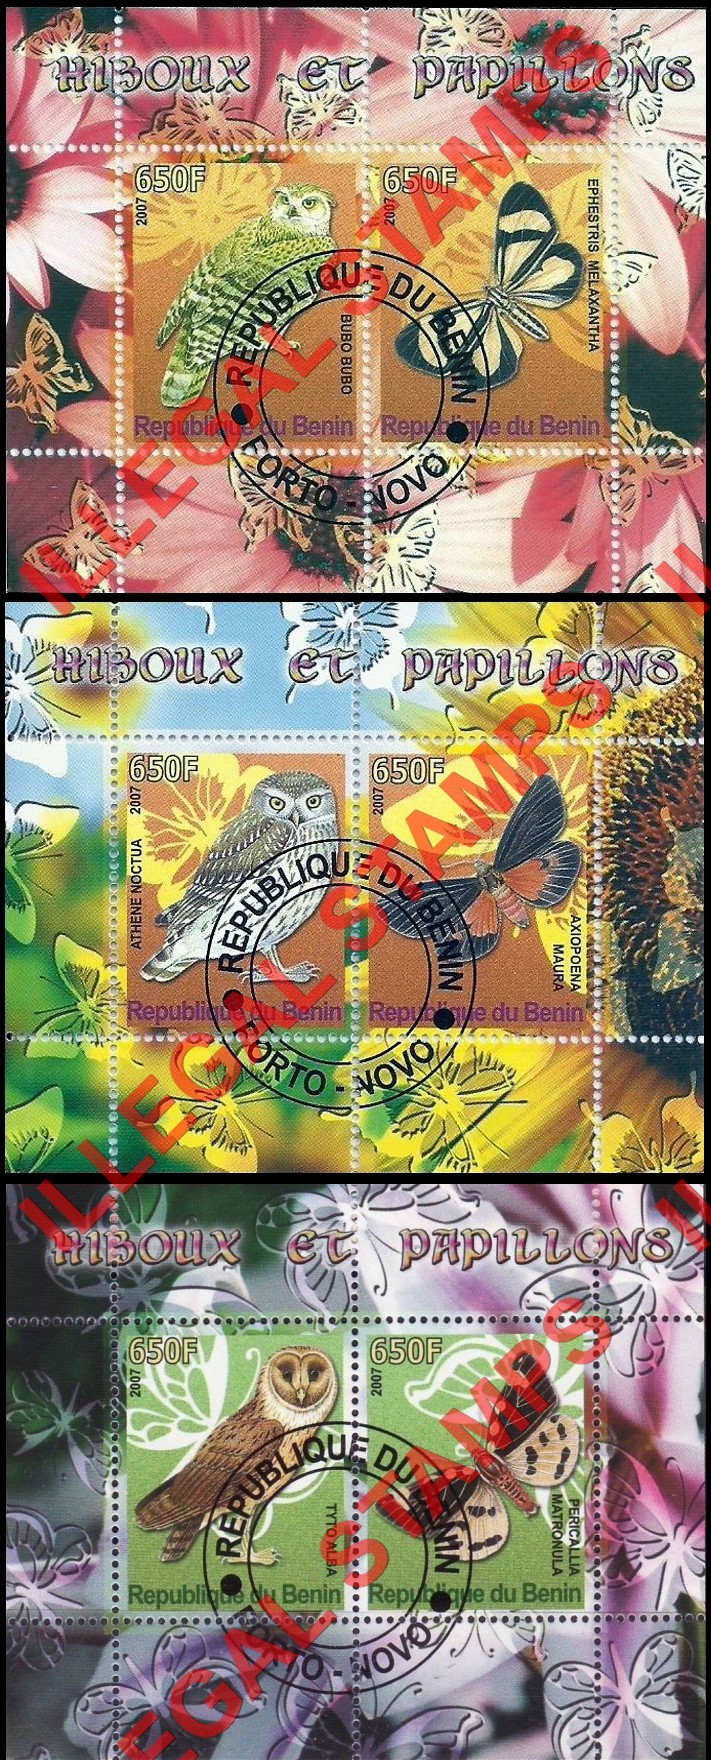 Benin 2007 Butterflies and Owls Illegal Stamp Souvenir Sheets of 2